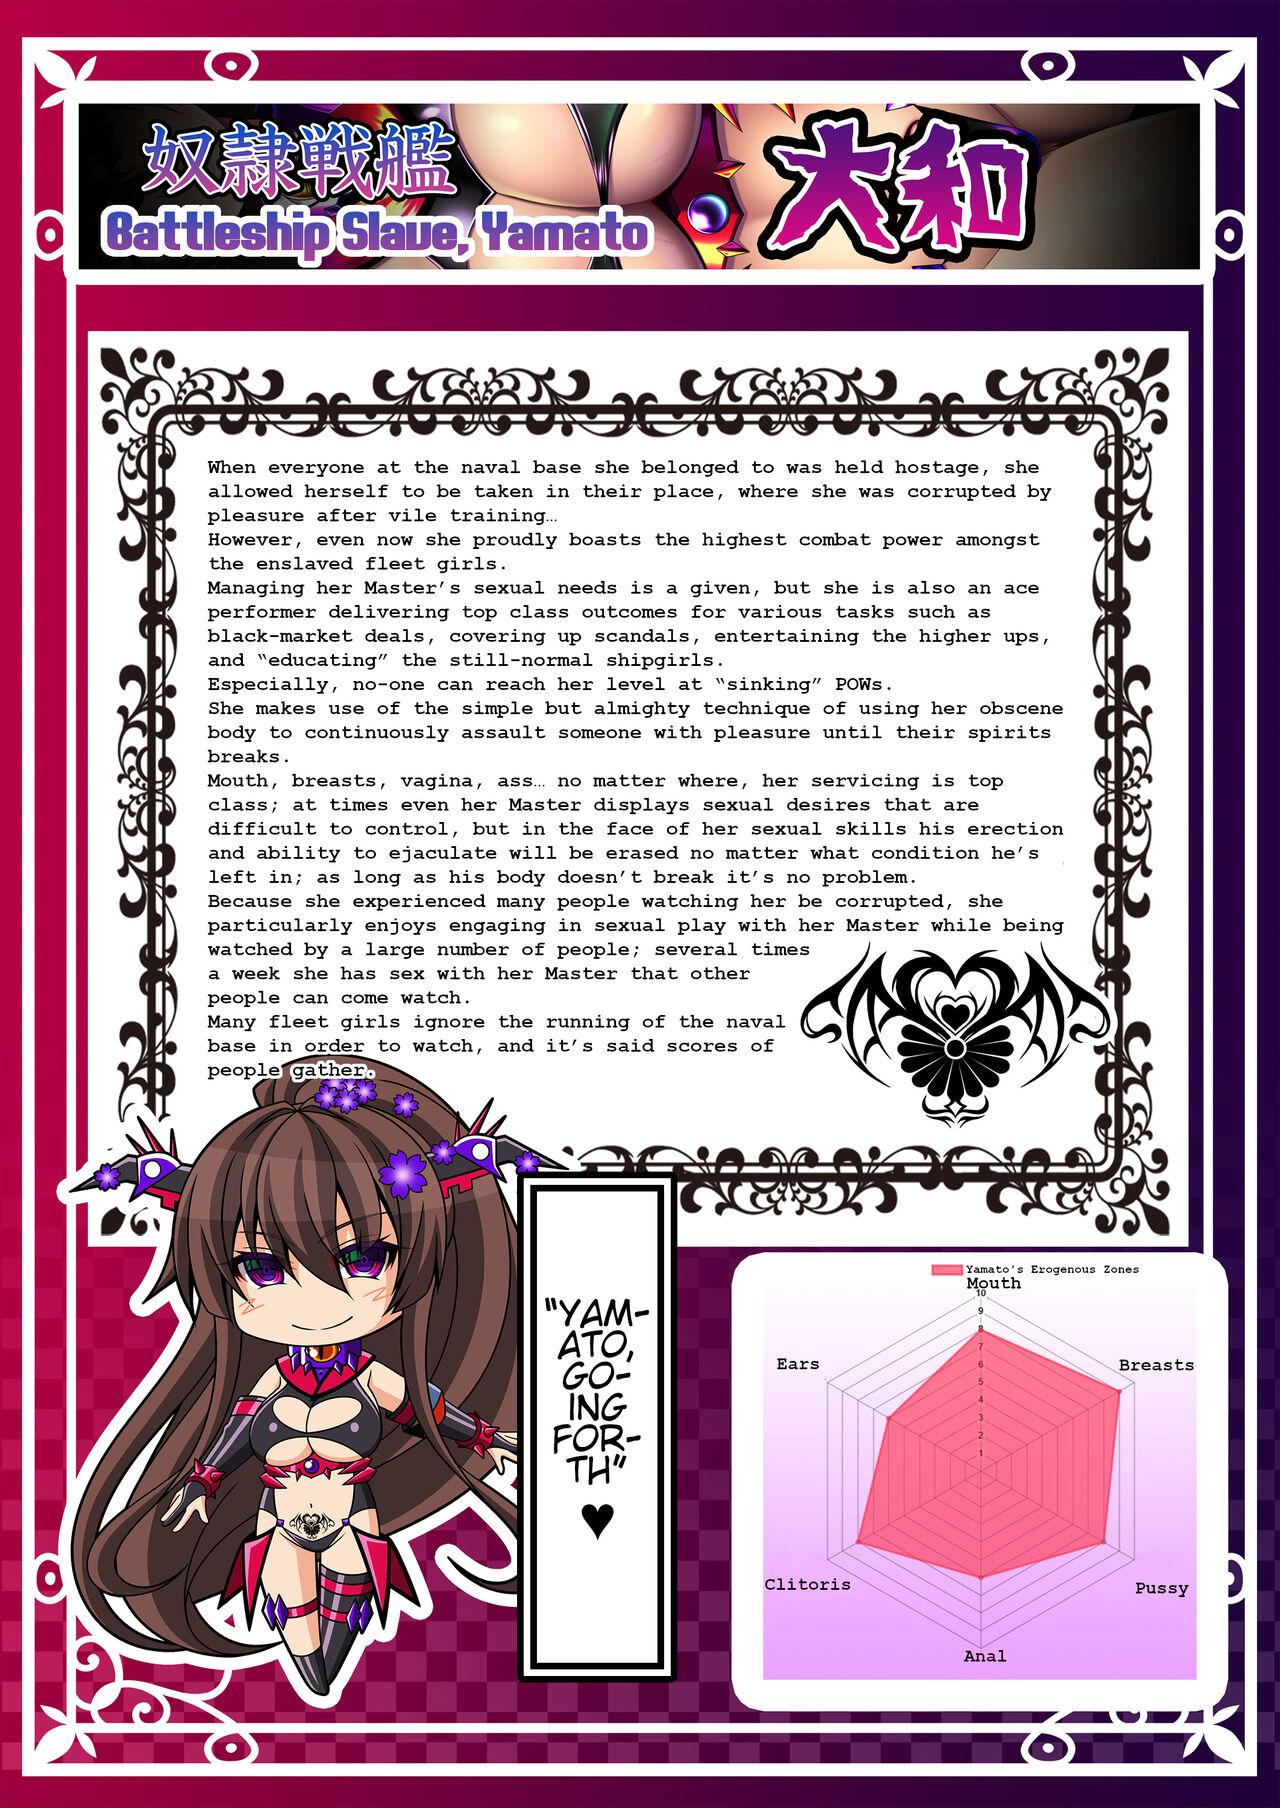 Akuochi Kanmusu Meikan + Akuochi Kanmusu Meikan Ni 1& 2 | Corrupted Fleet Girl Files Dossier #1 + 2.1 + 2.2 40